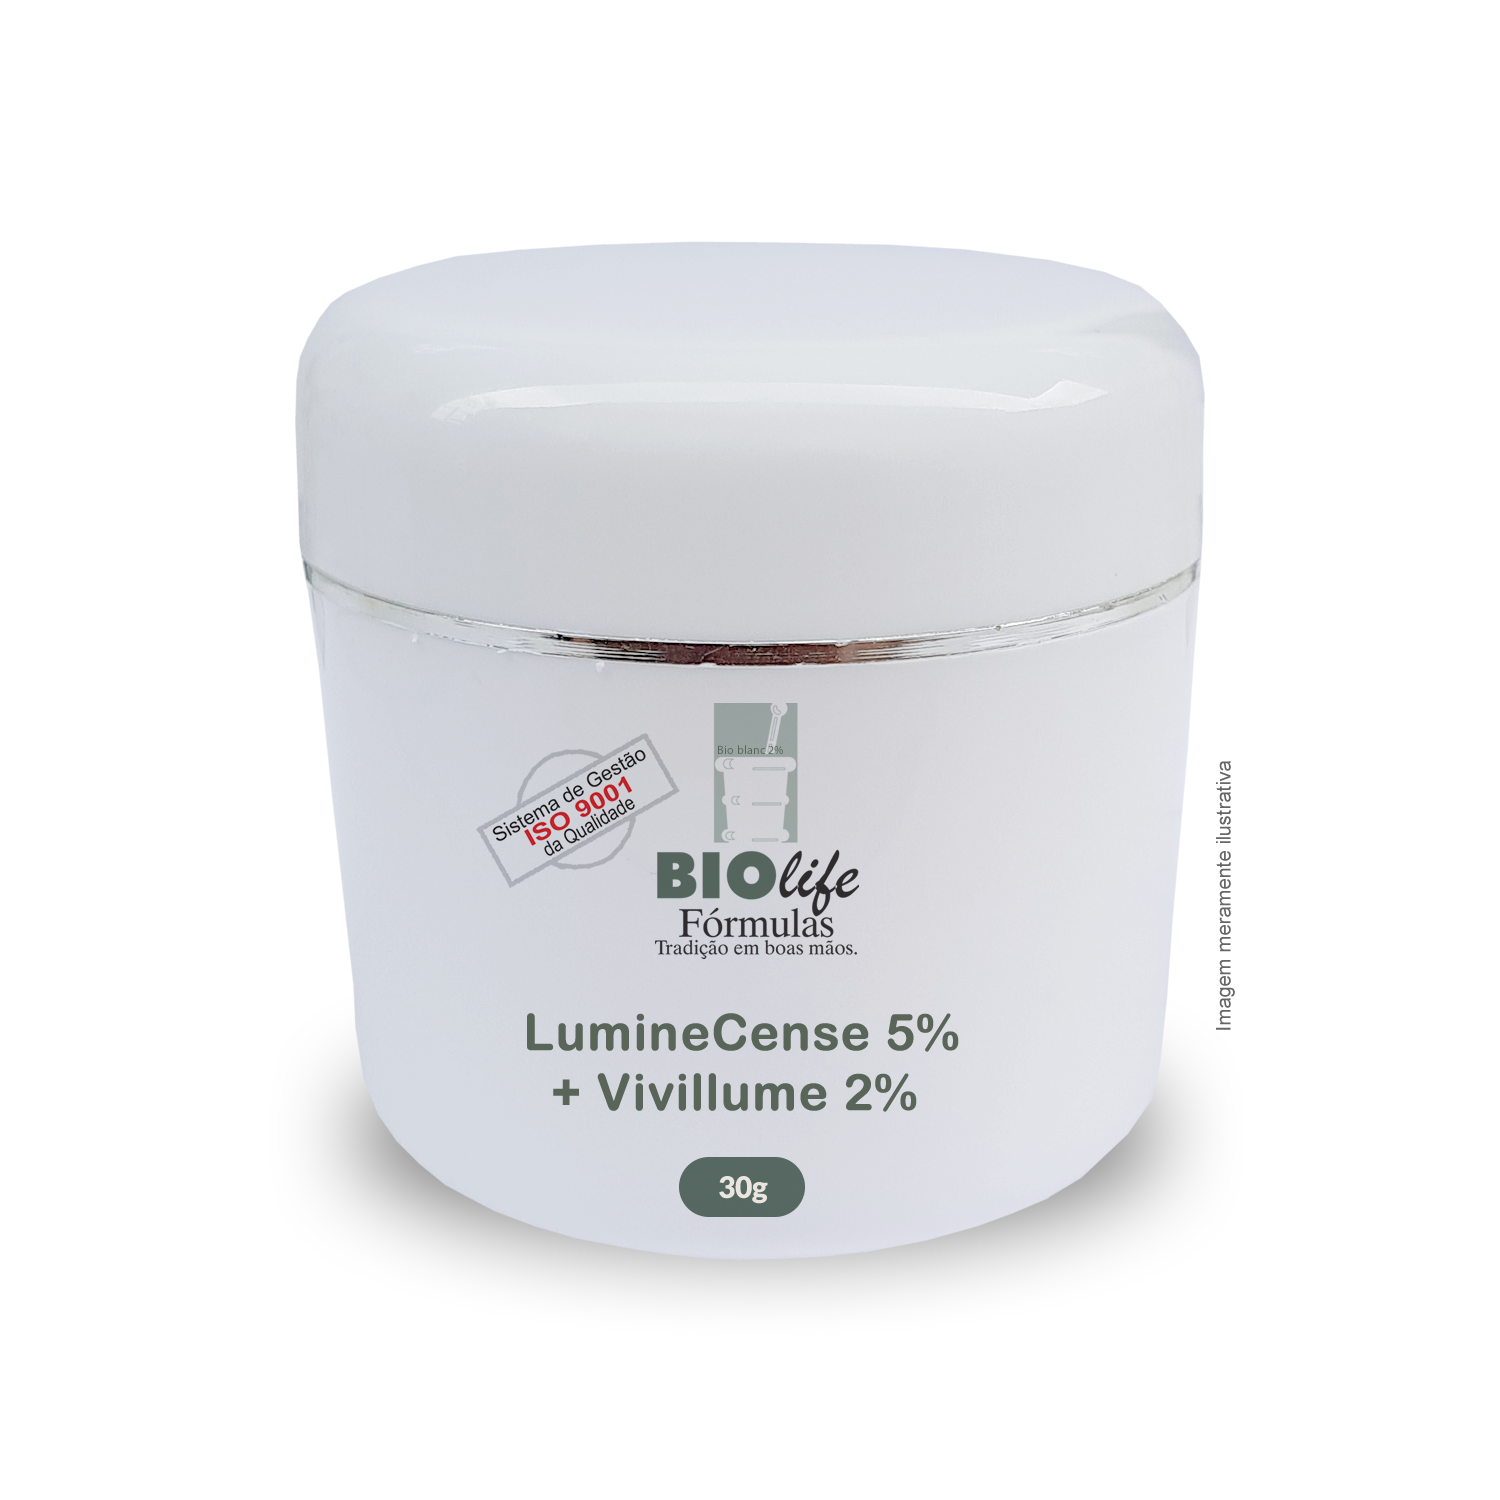 LumineCense 5% + Vivillume 2% + Base Hidrafresh qsp 30g - BioLife